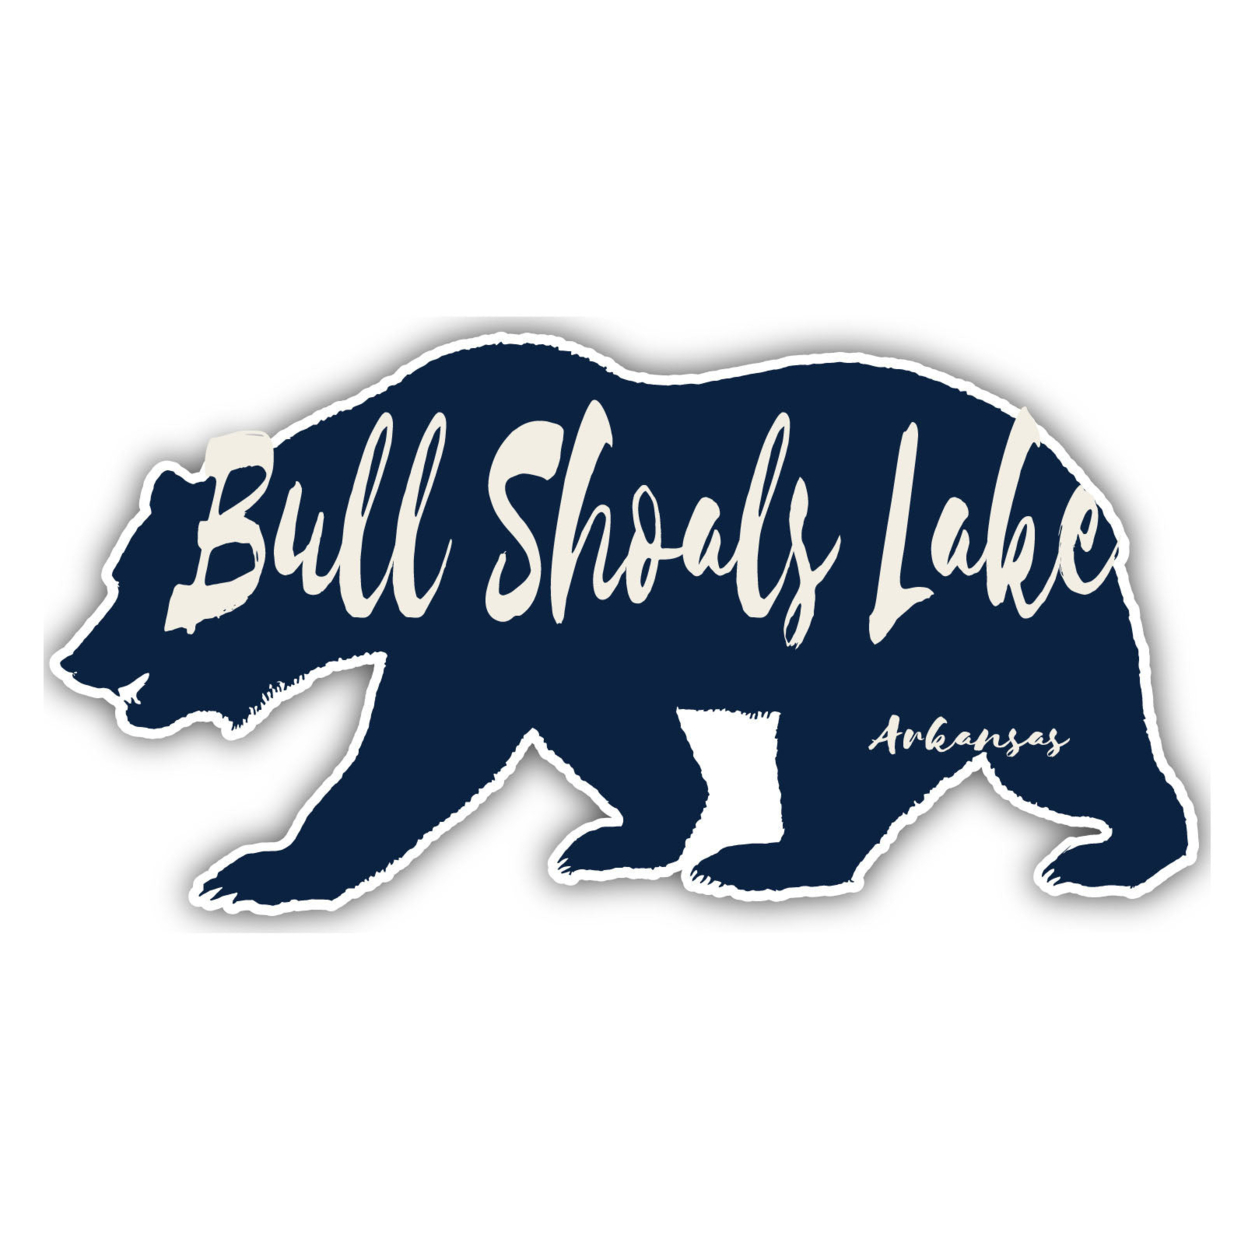 Bull Shoals Lake Arkansas Souvenir Decorative Stickers (Choose Theme And Size) - 4-Pack, 6-Inch, Adventures Awaits